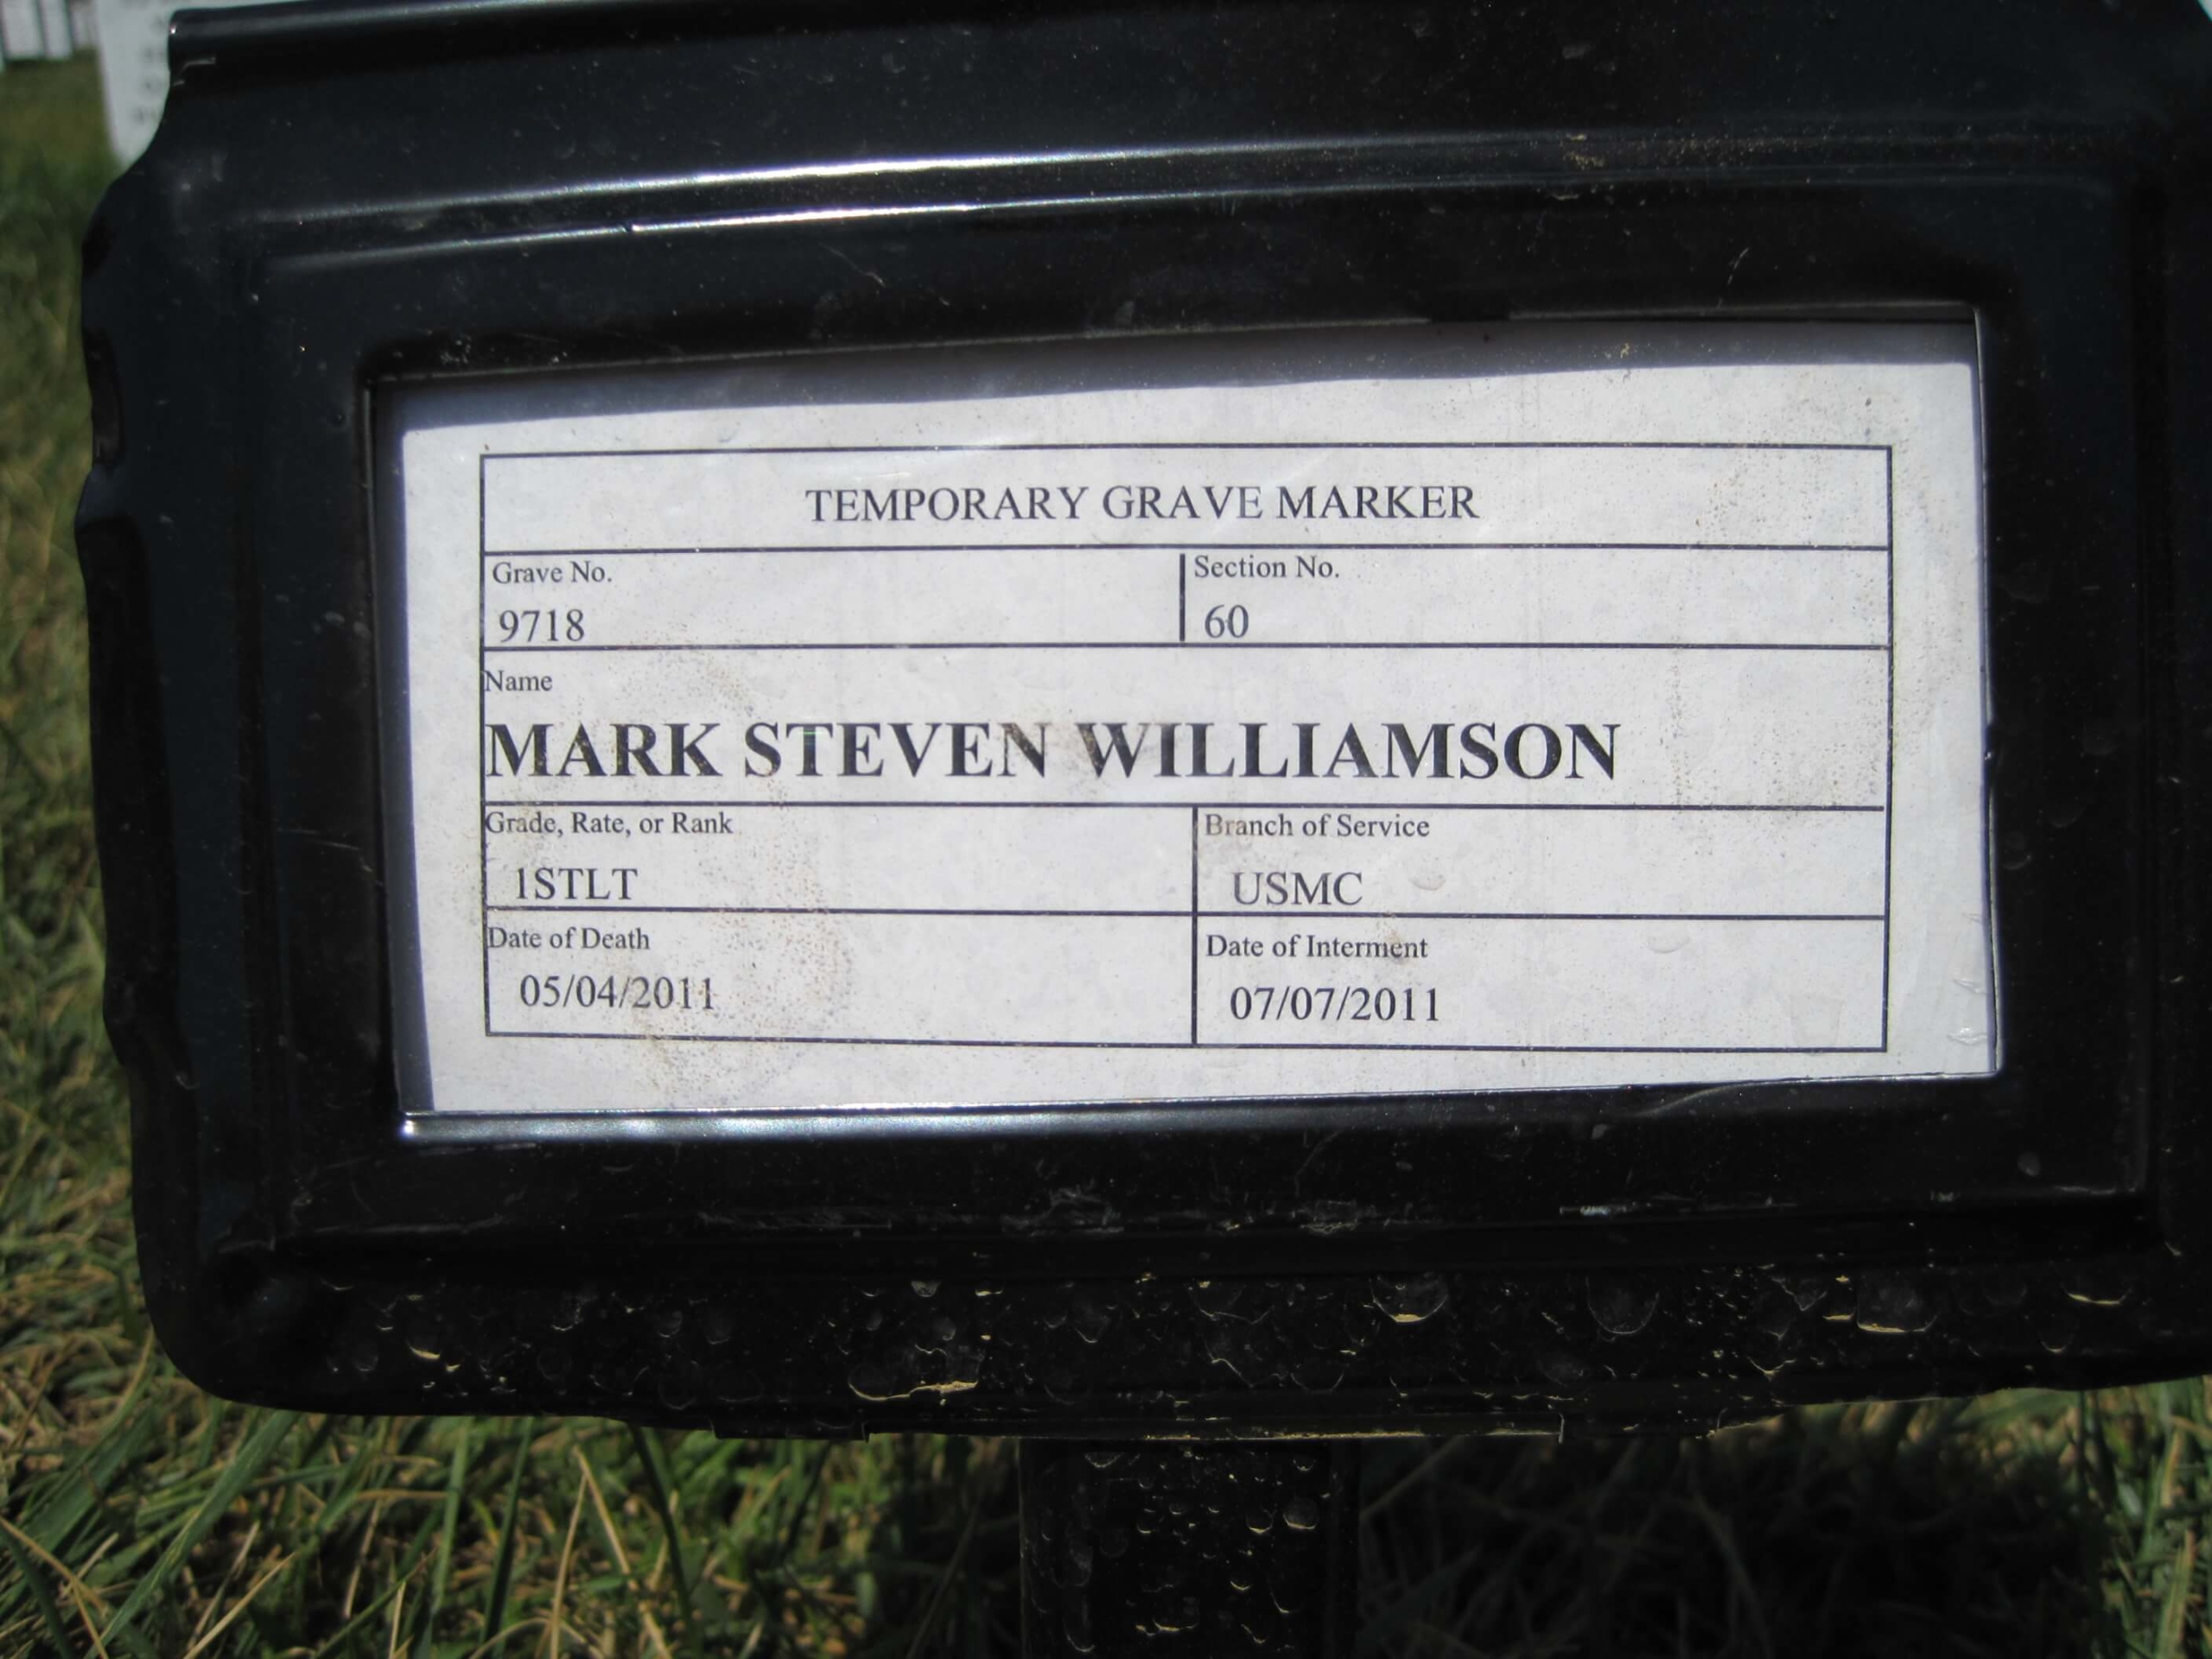 mswilliamson-gravesite-photo-by-eileen-horan-july-2011-001